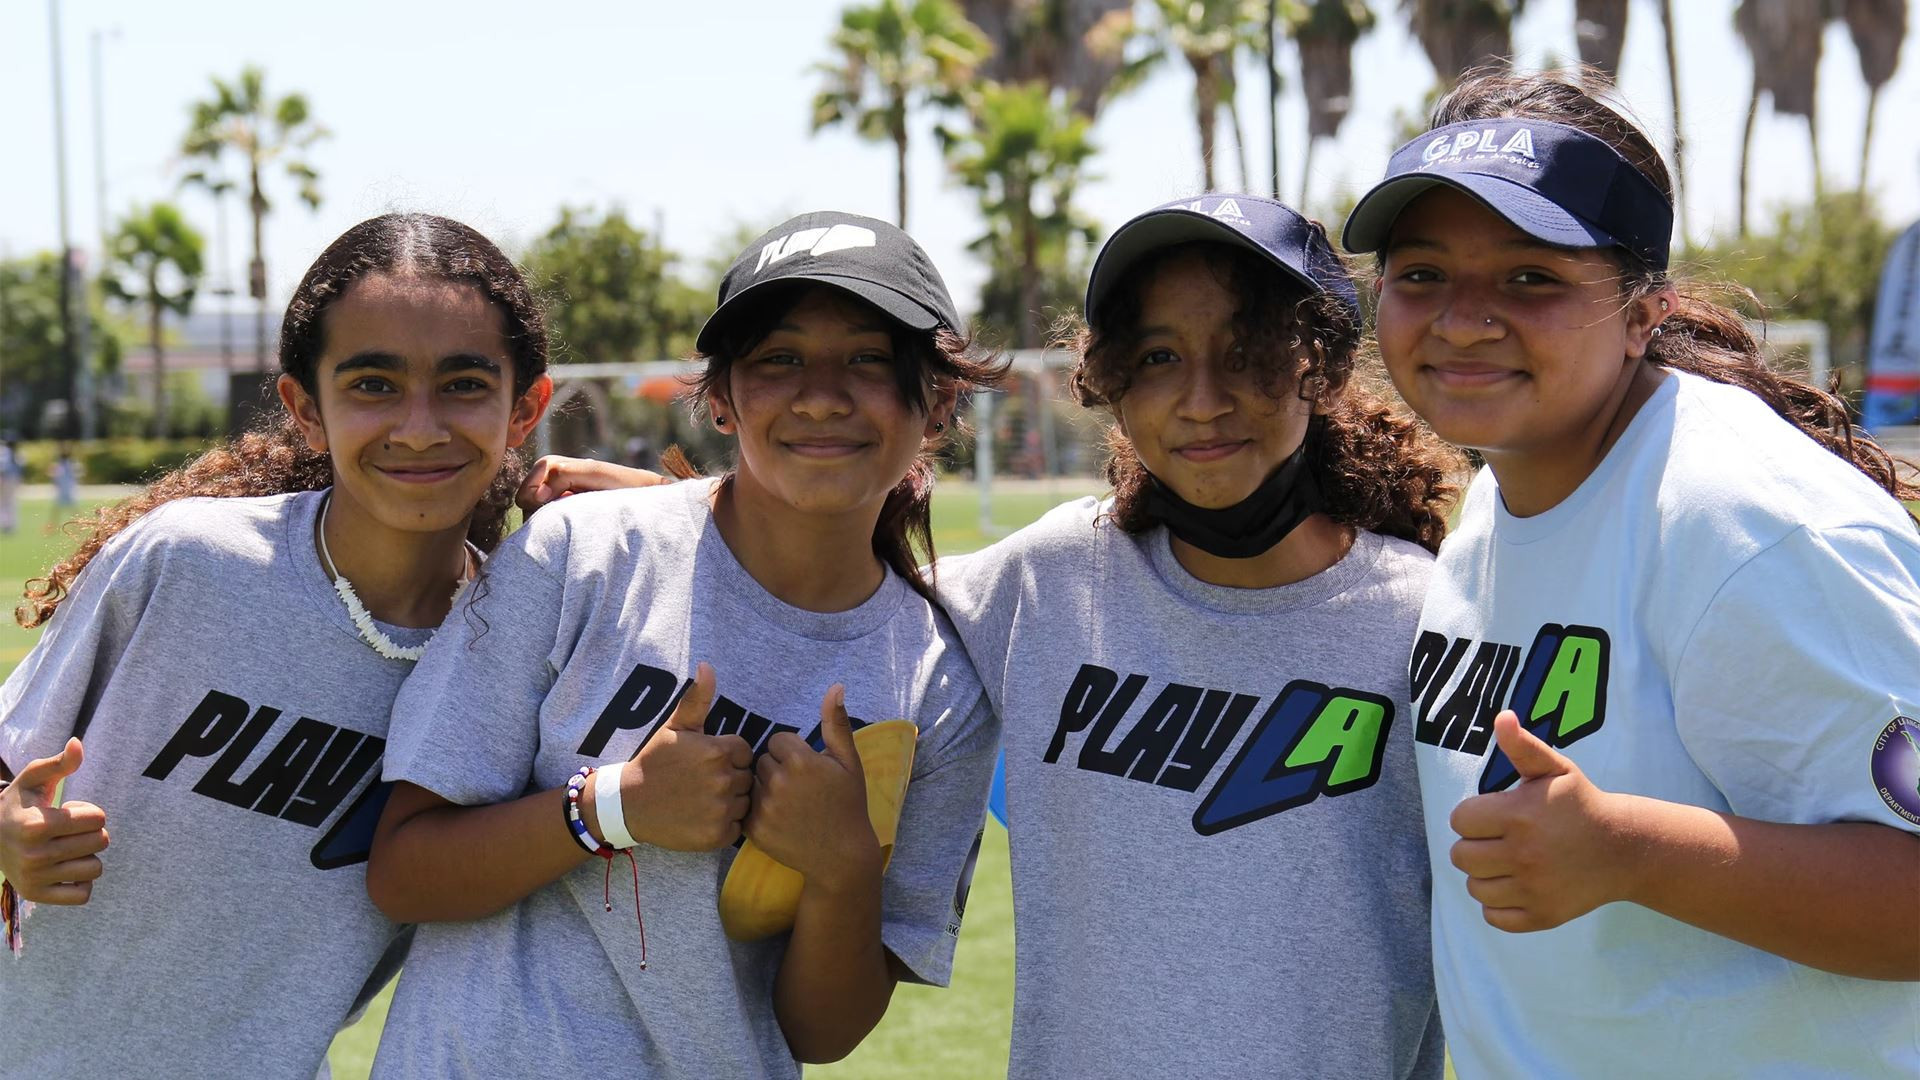  Extra funding of $17.5 million for PlayLA scheme to benefit Los Angeles schoolchildren